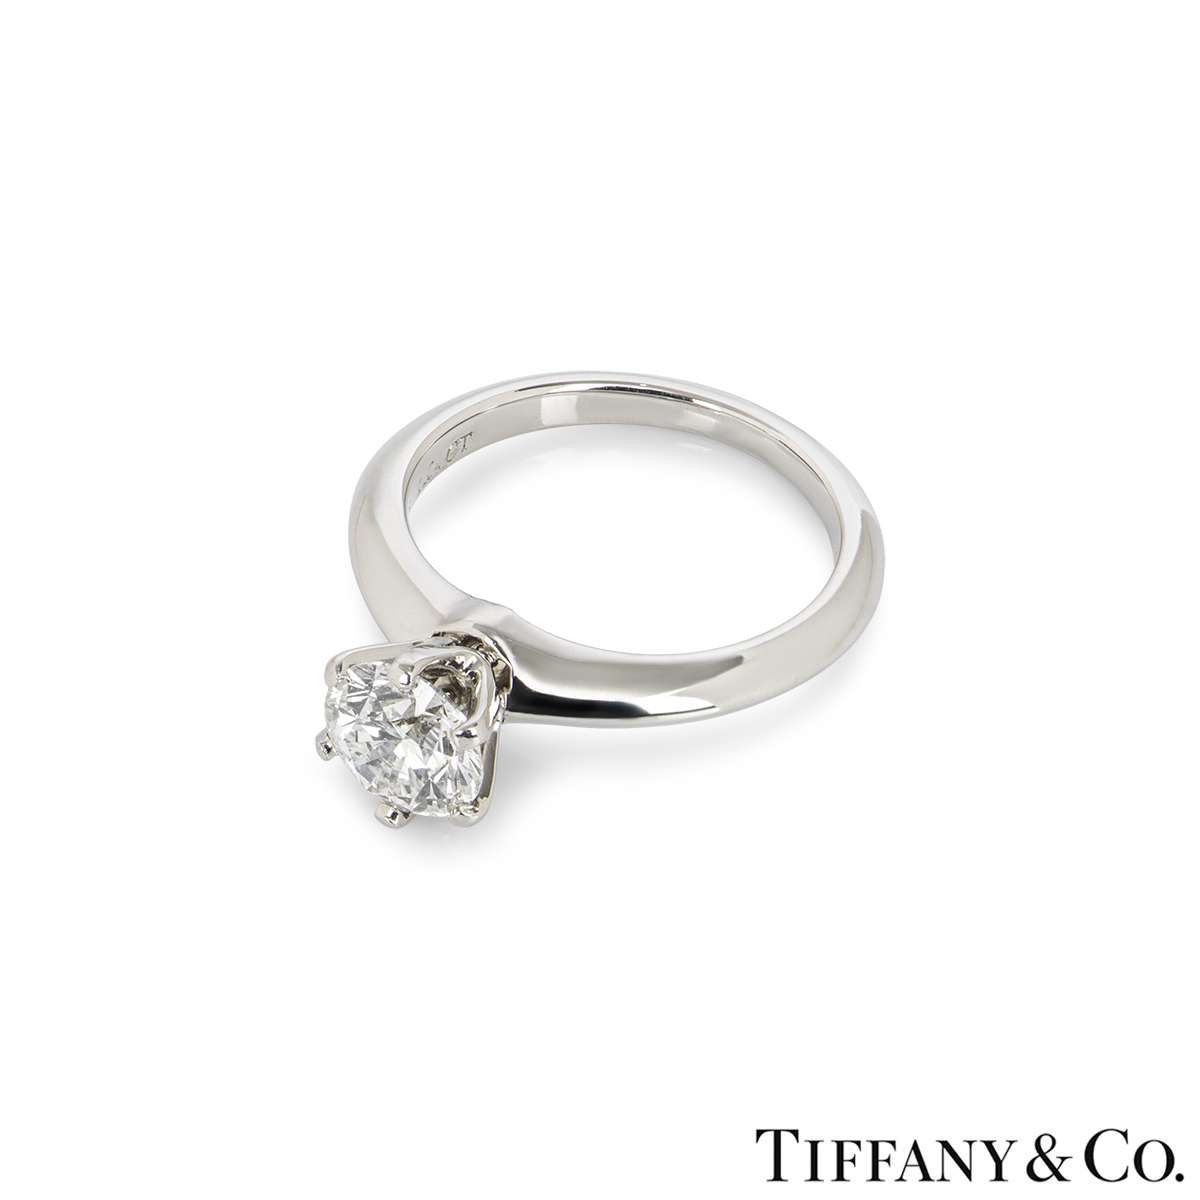 Tiffany & Co. Platinum Diamond Setting Ring 1.04ct G/VS2